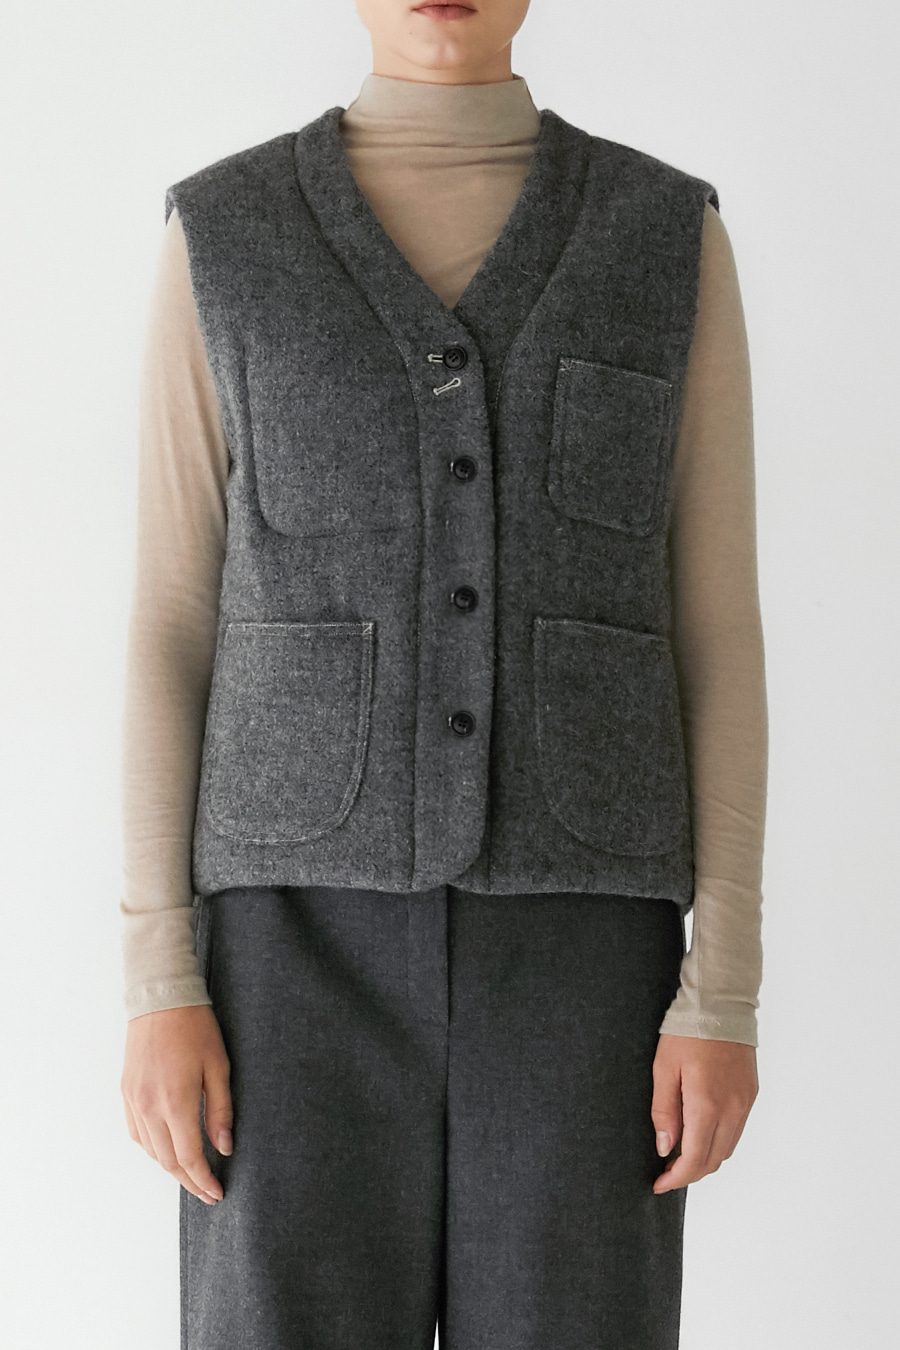 clancy wool vest